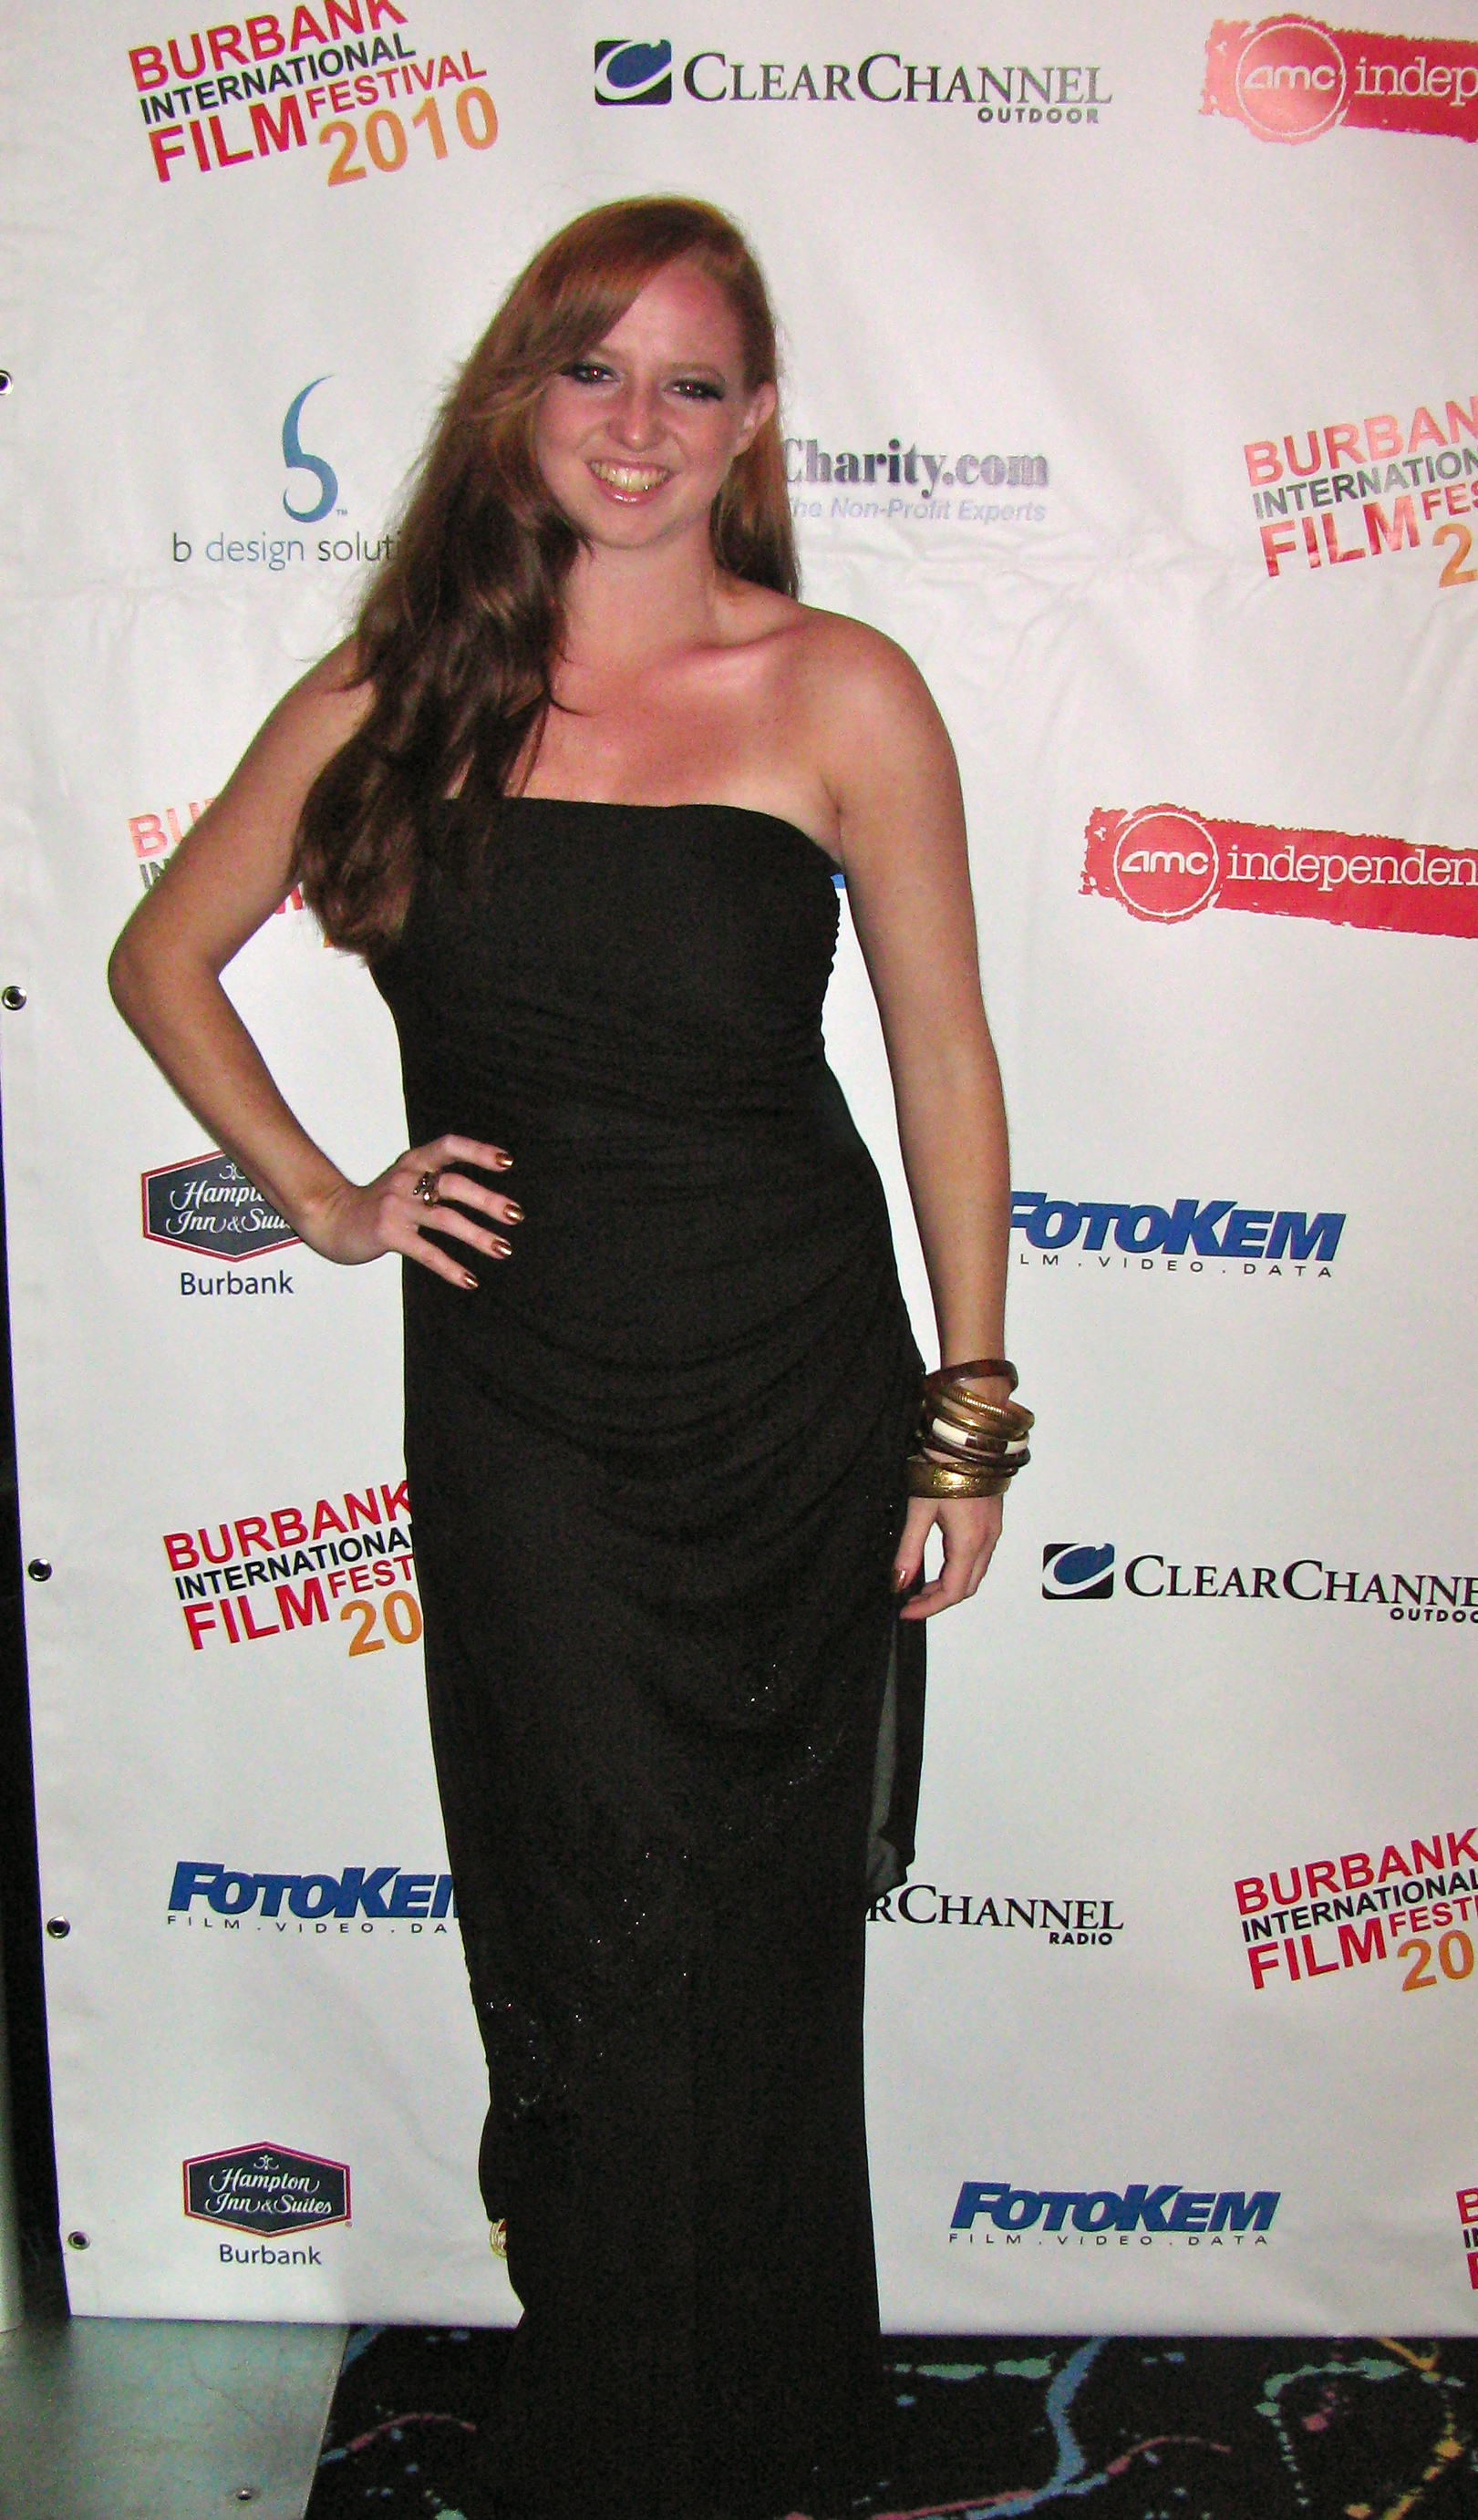 Burbank Film Festival 2010 Los Angeles USA